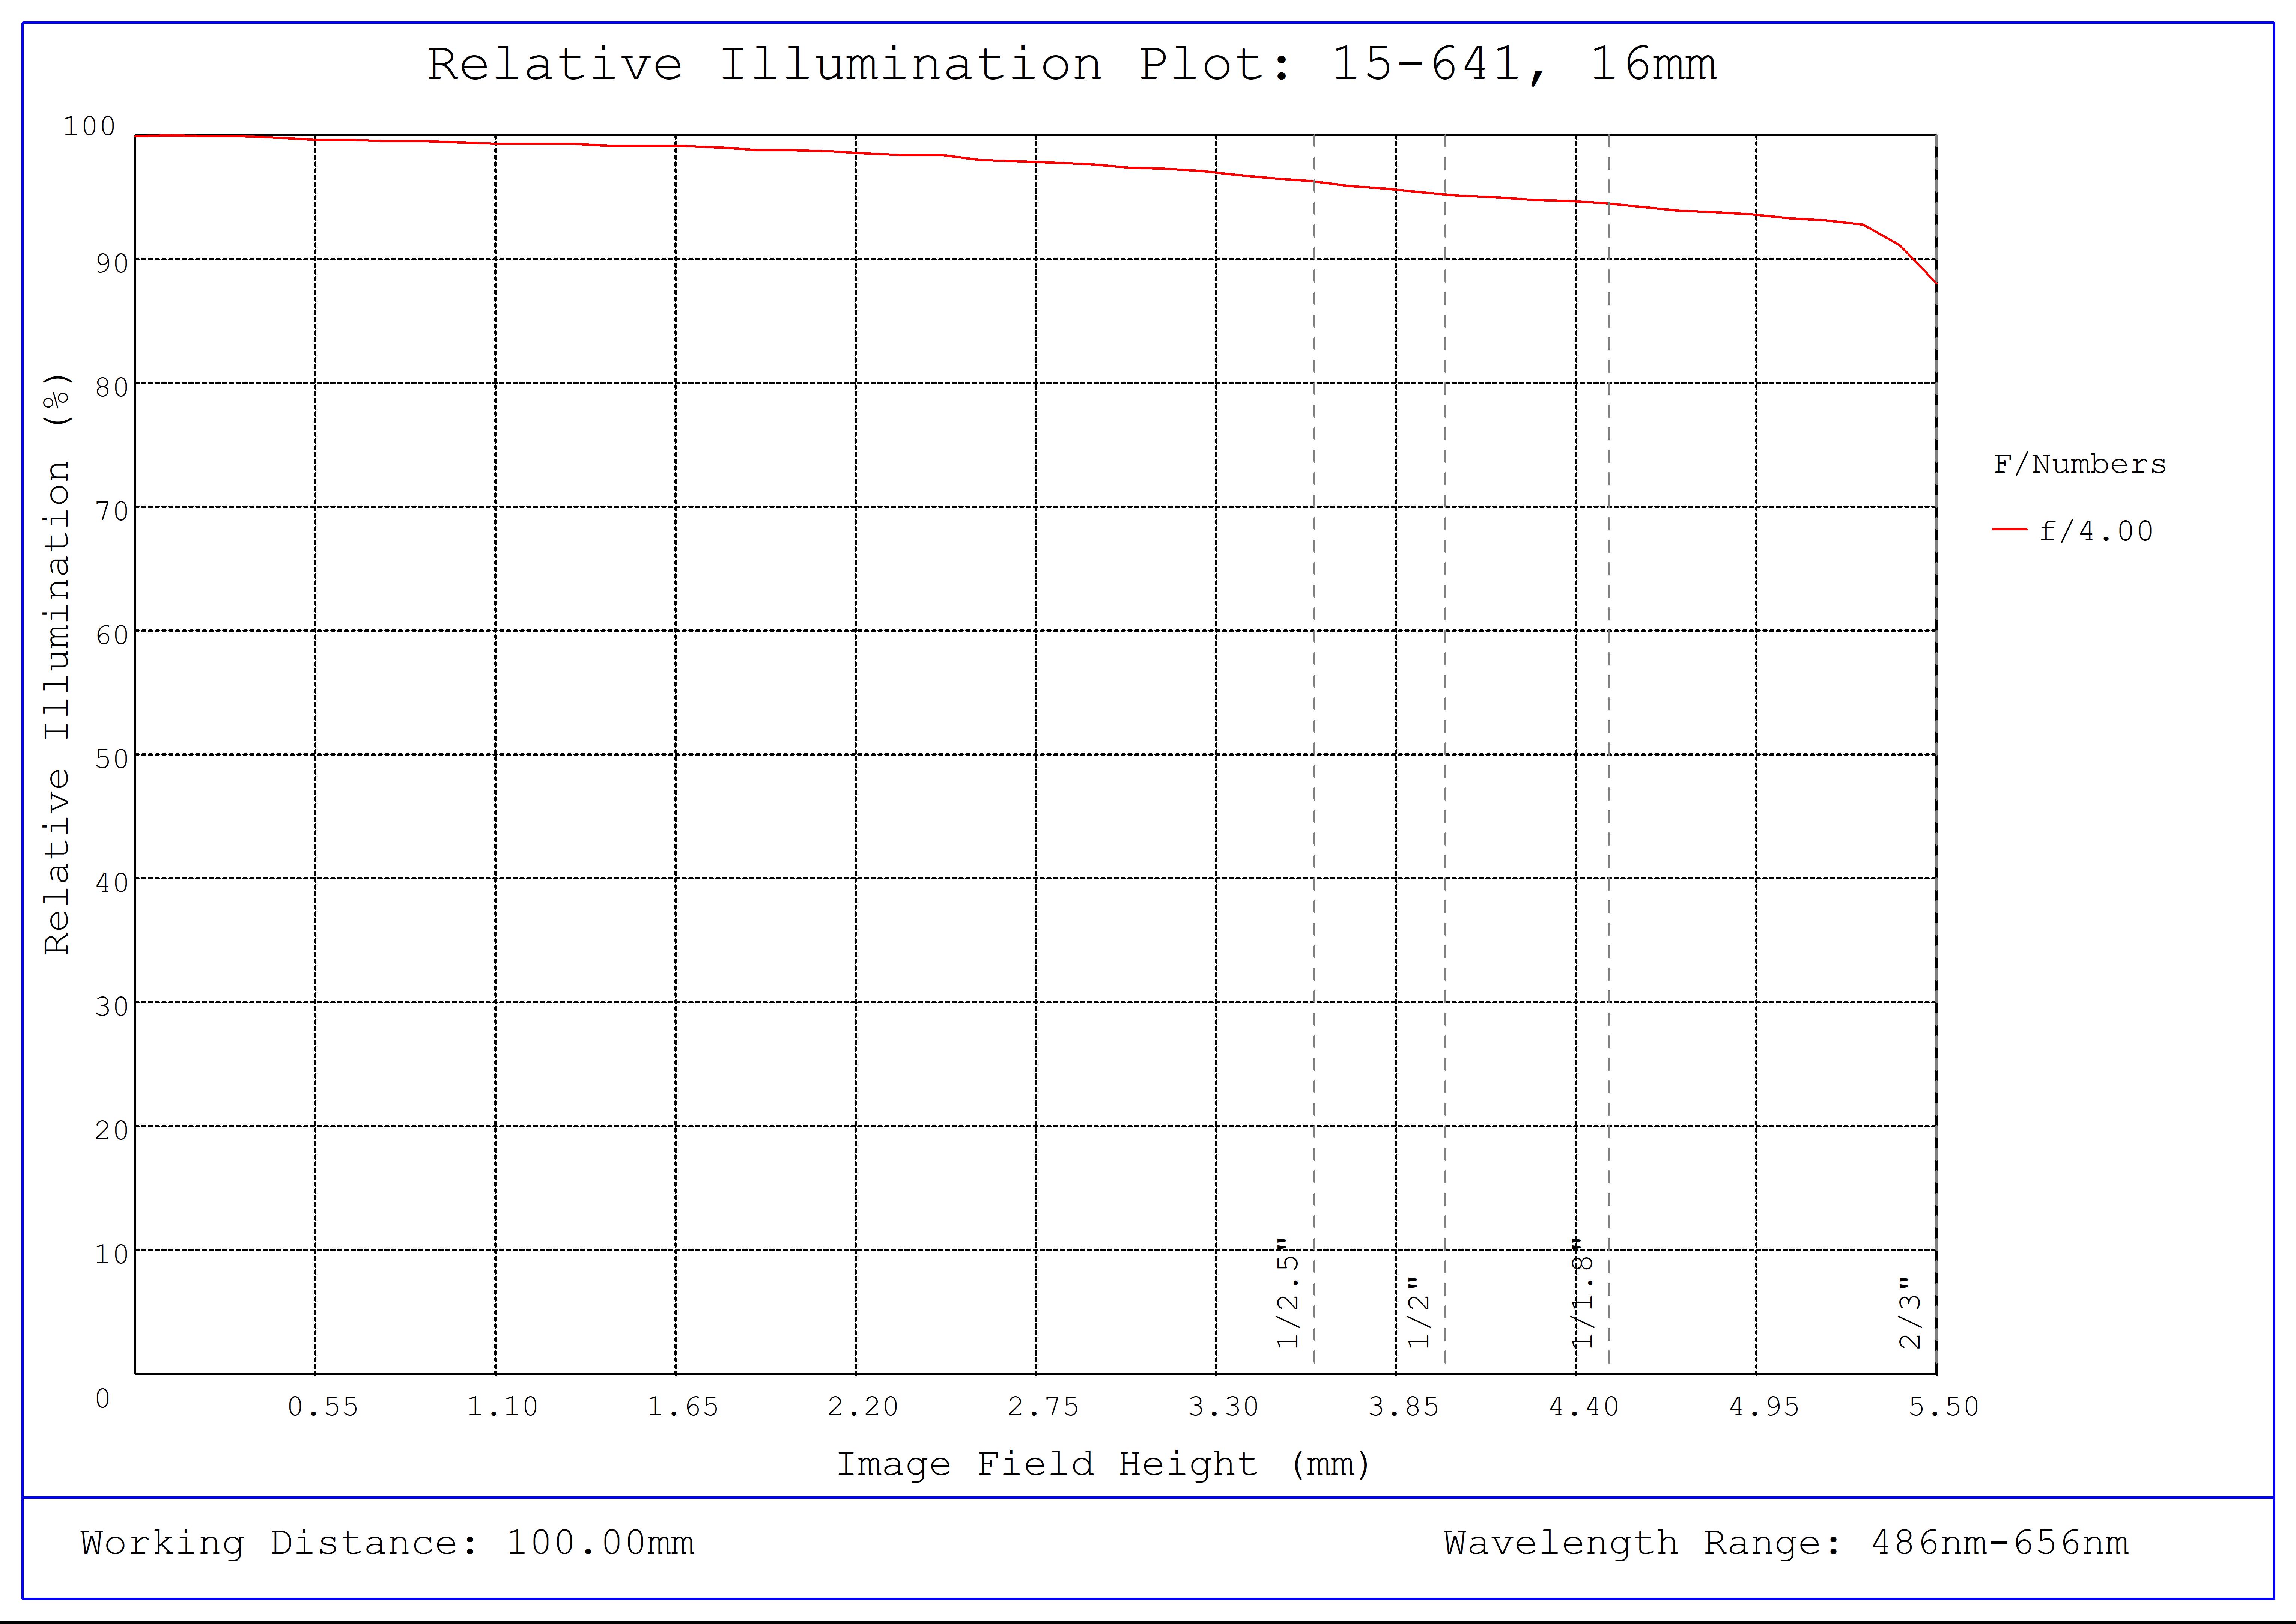 #15-641, 16mm, f/4 Cw Series Fixed Focal Length Lens, Relative Illumination Plot